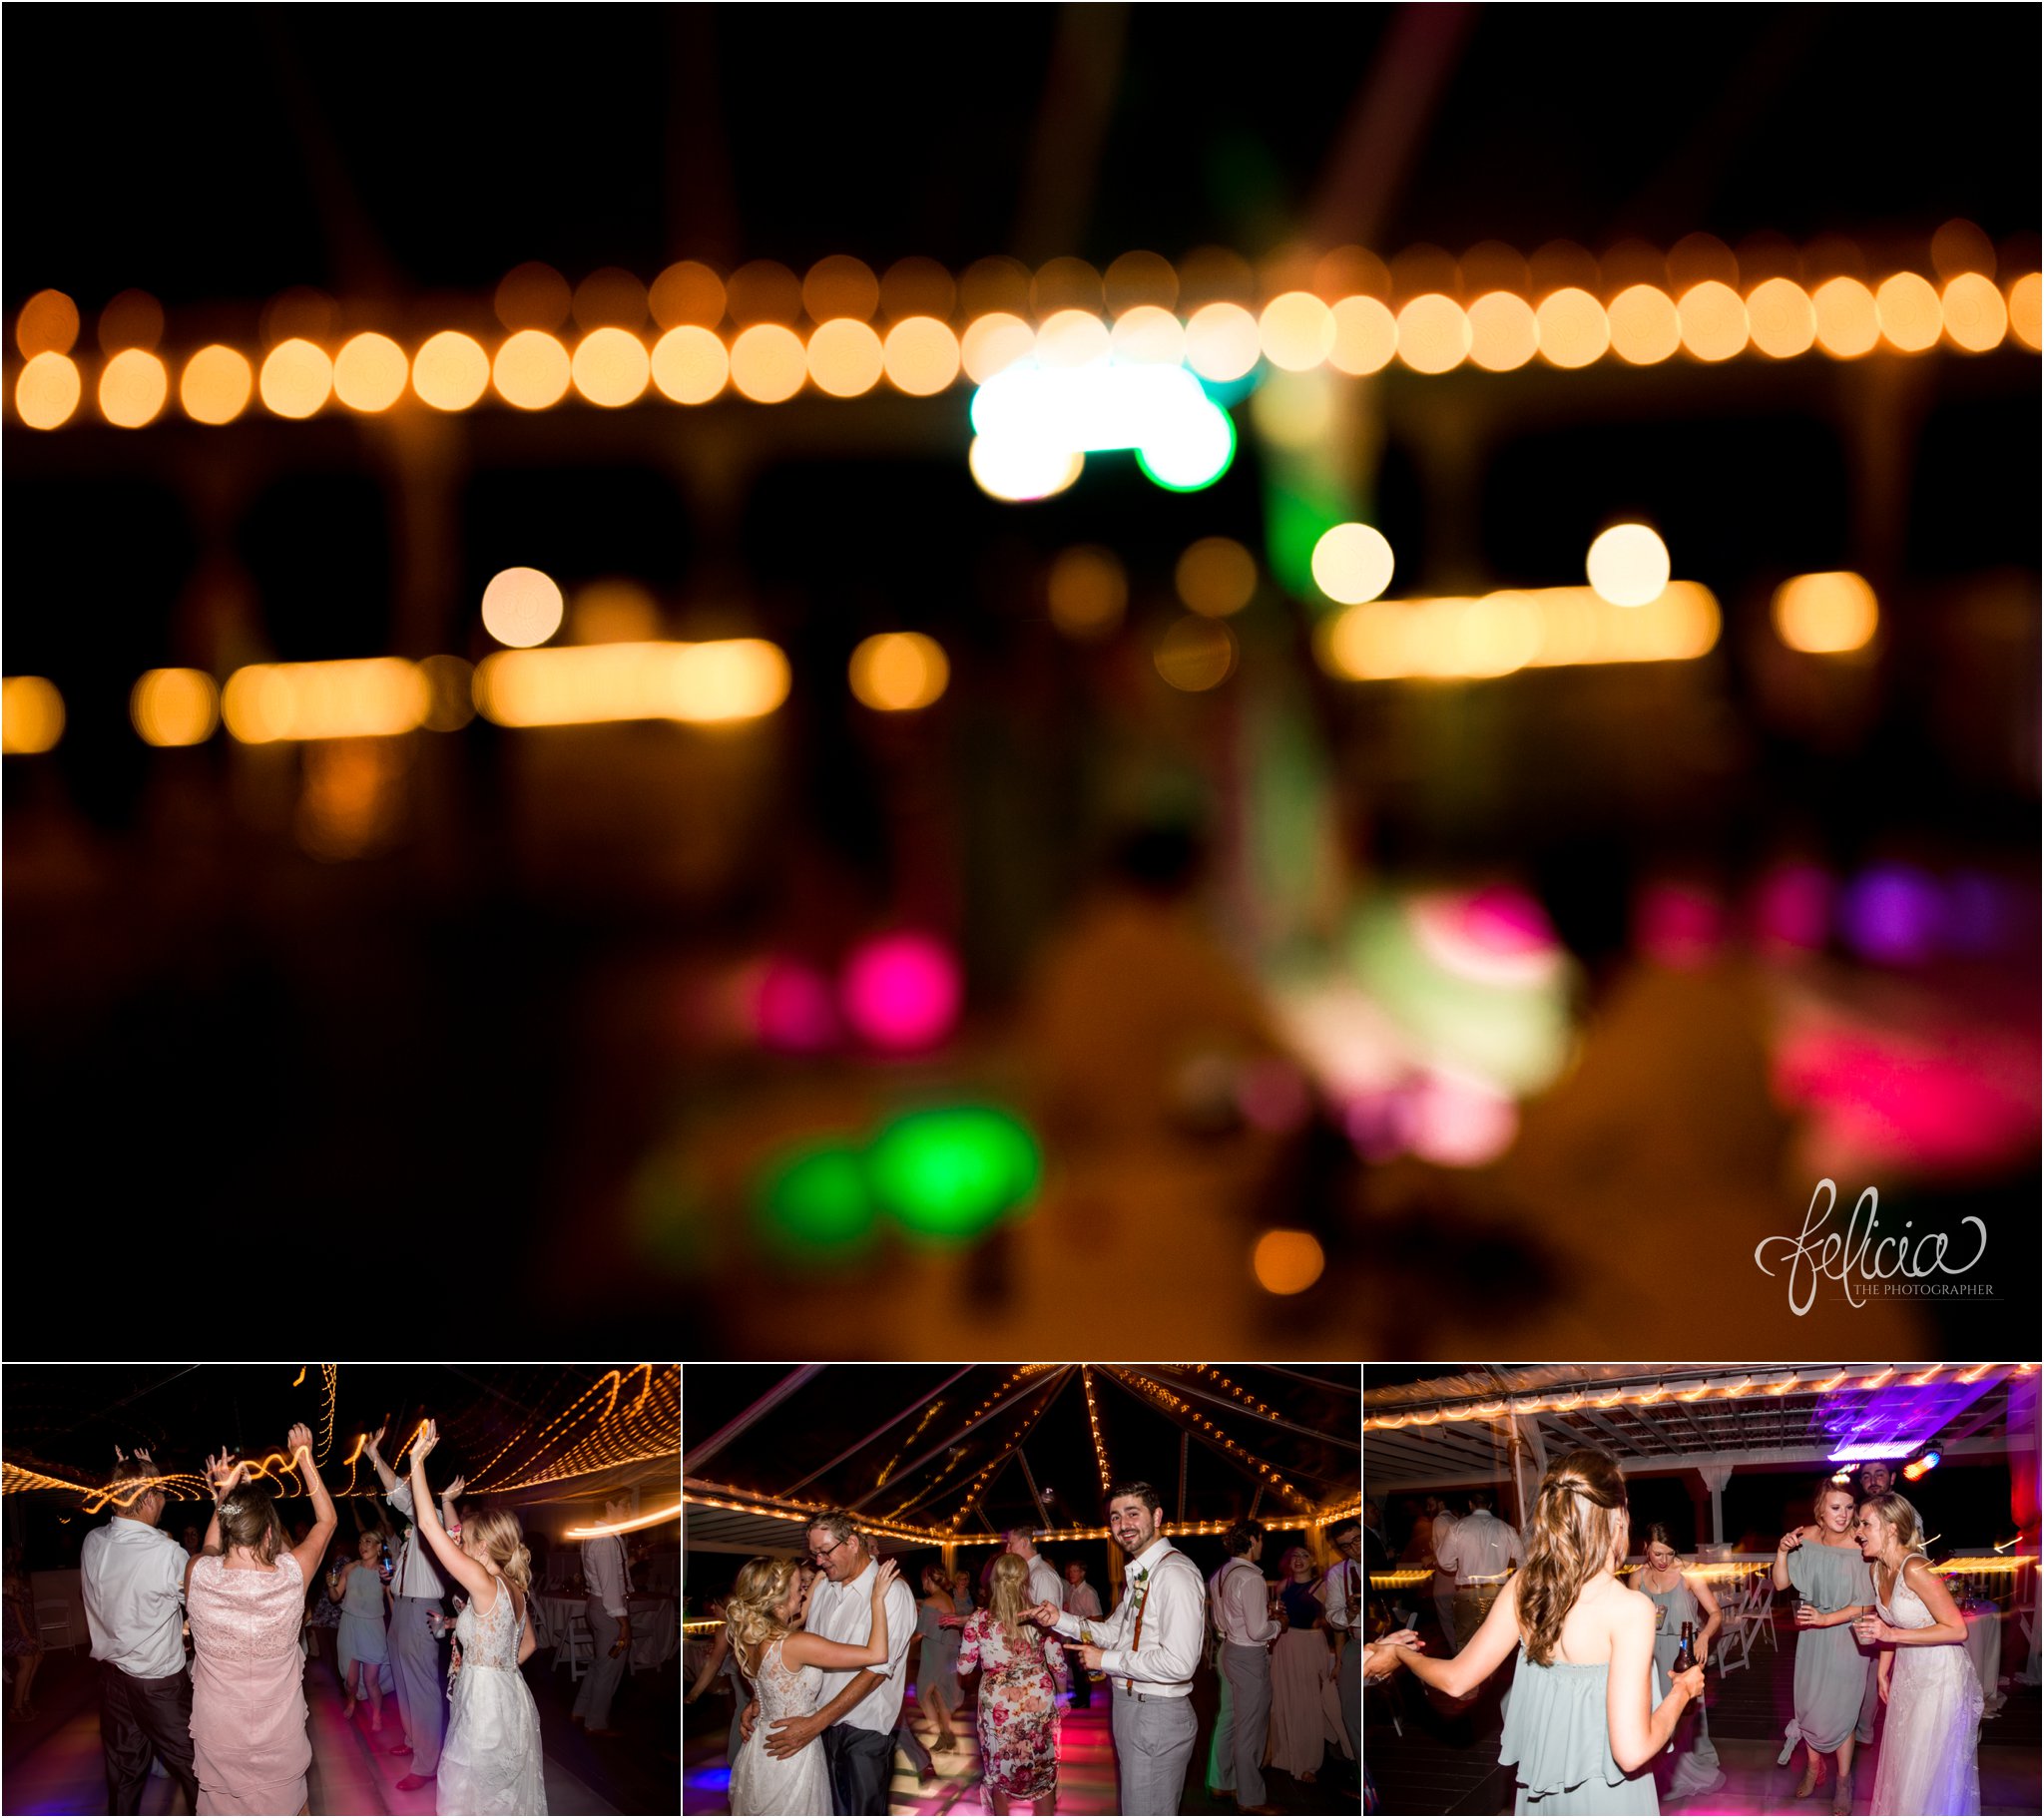 images by feliciathephotographer.com | destination wedding | the makey house | dave gibson coordinator | travel photographer | Savannah, georgia | southern | reception | celebration | dance party | bride | groom 